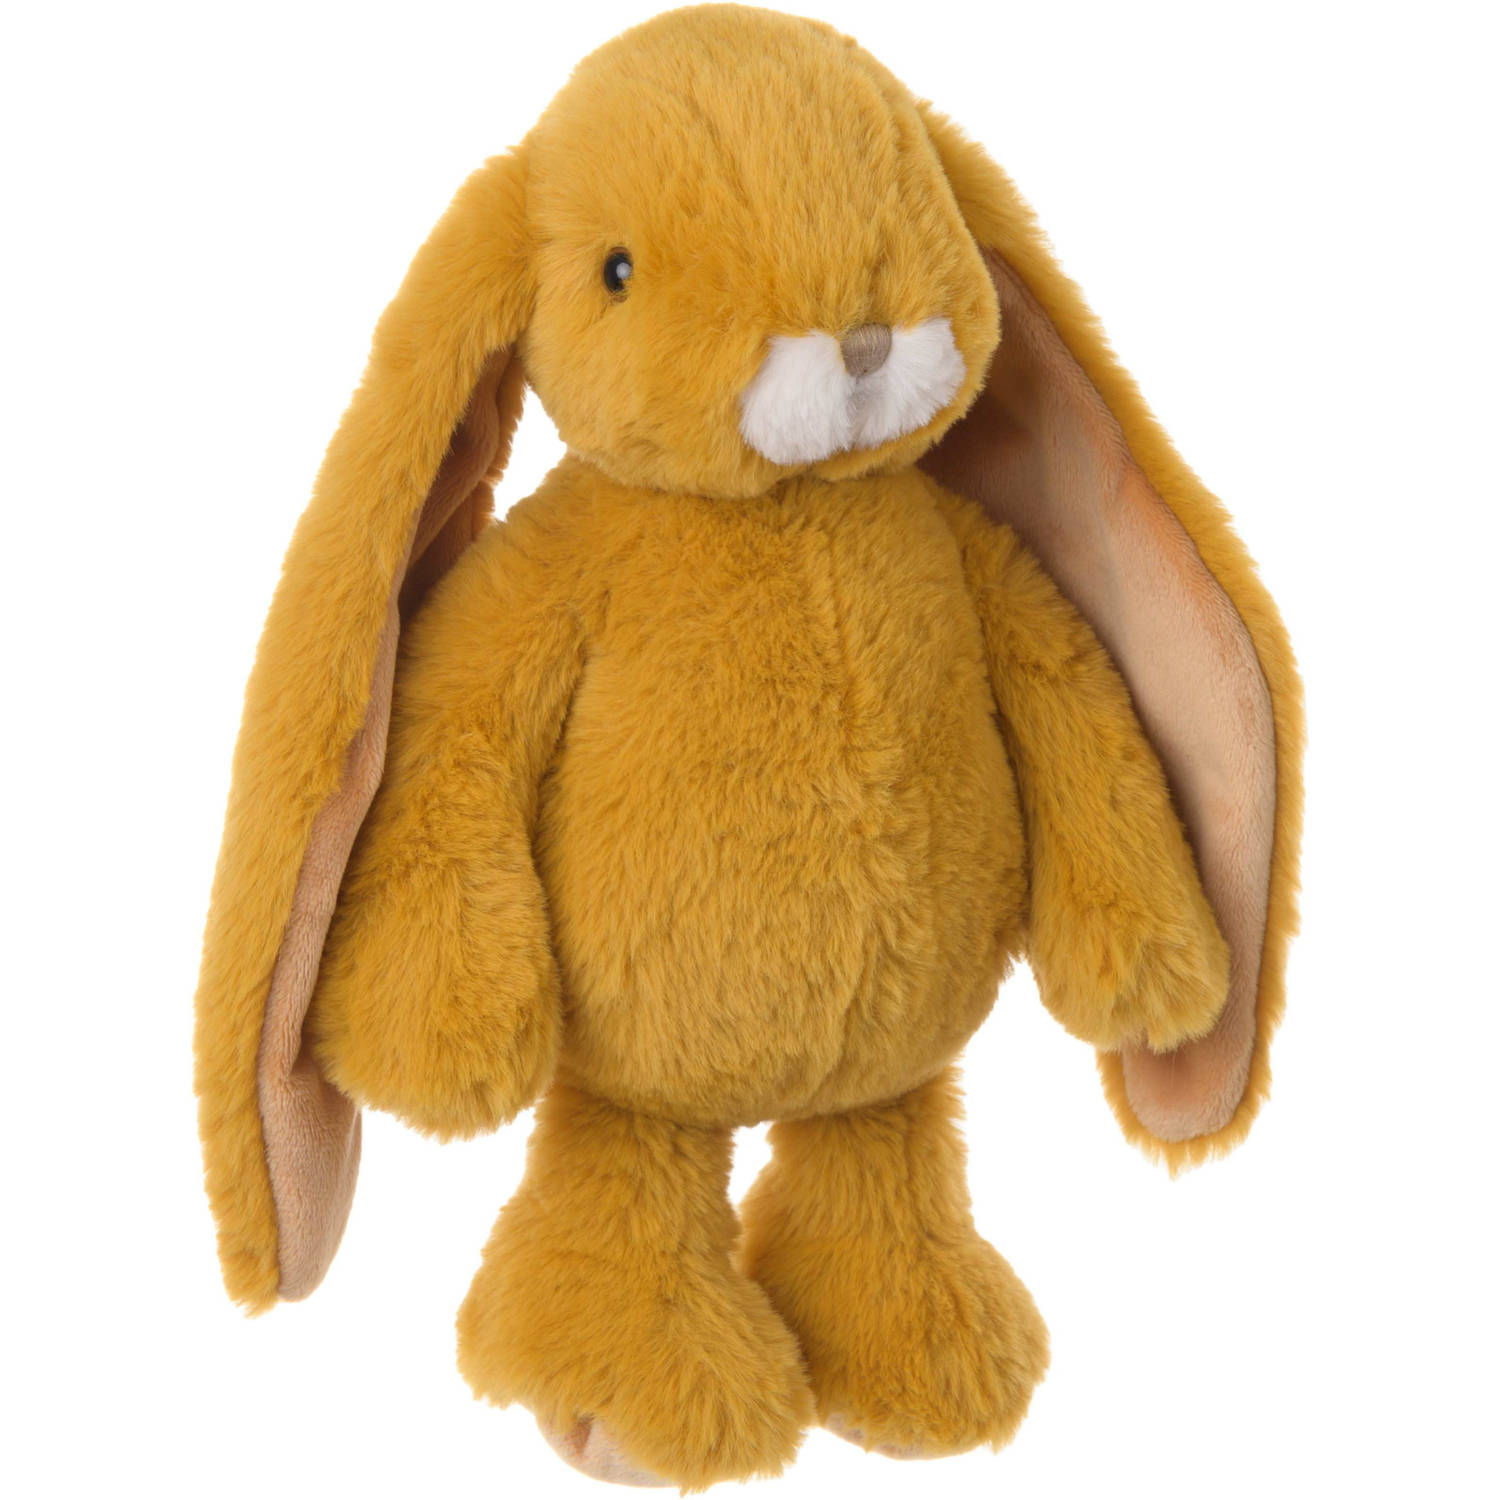 Bukowski pluche konijn knuffeldier - dark okergeel - staand - 30 cm - Luxe kwaliteit knuffels